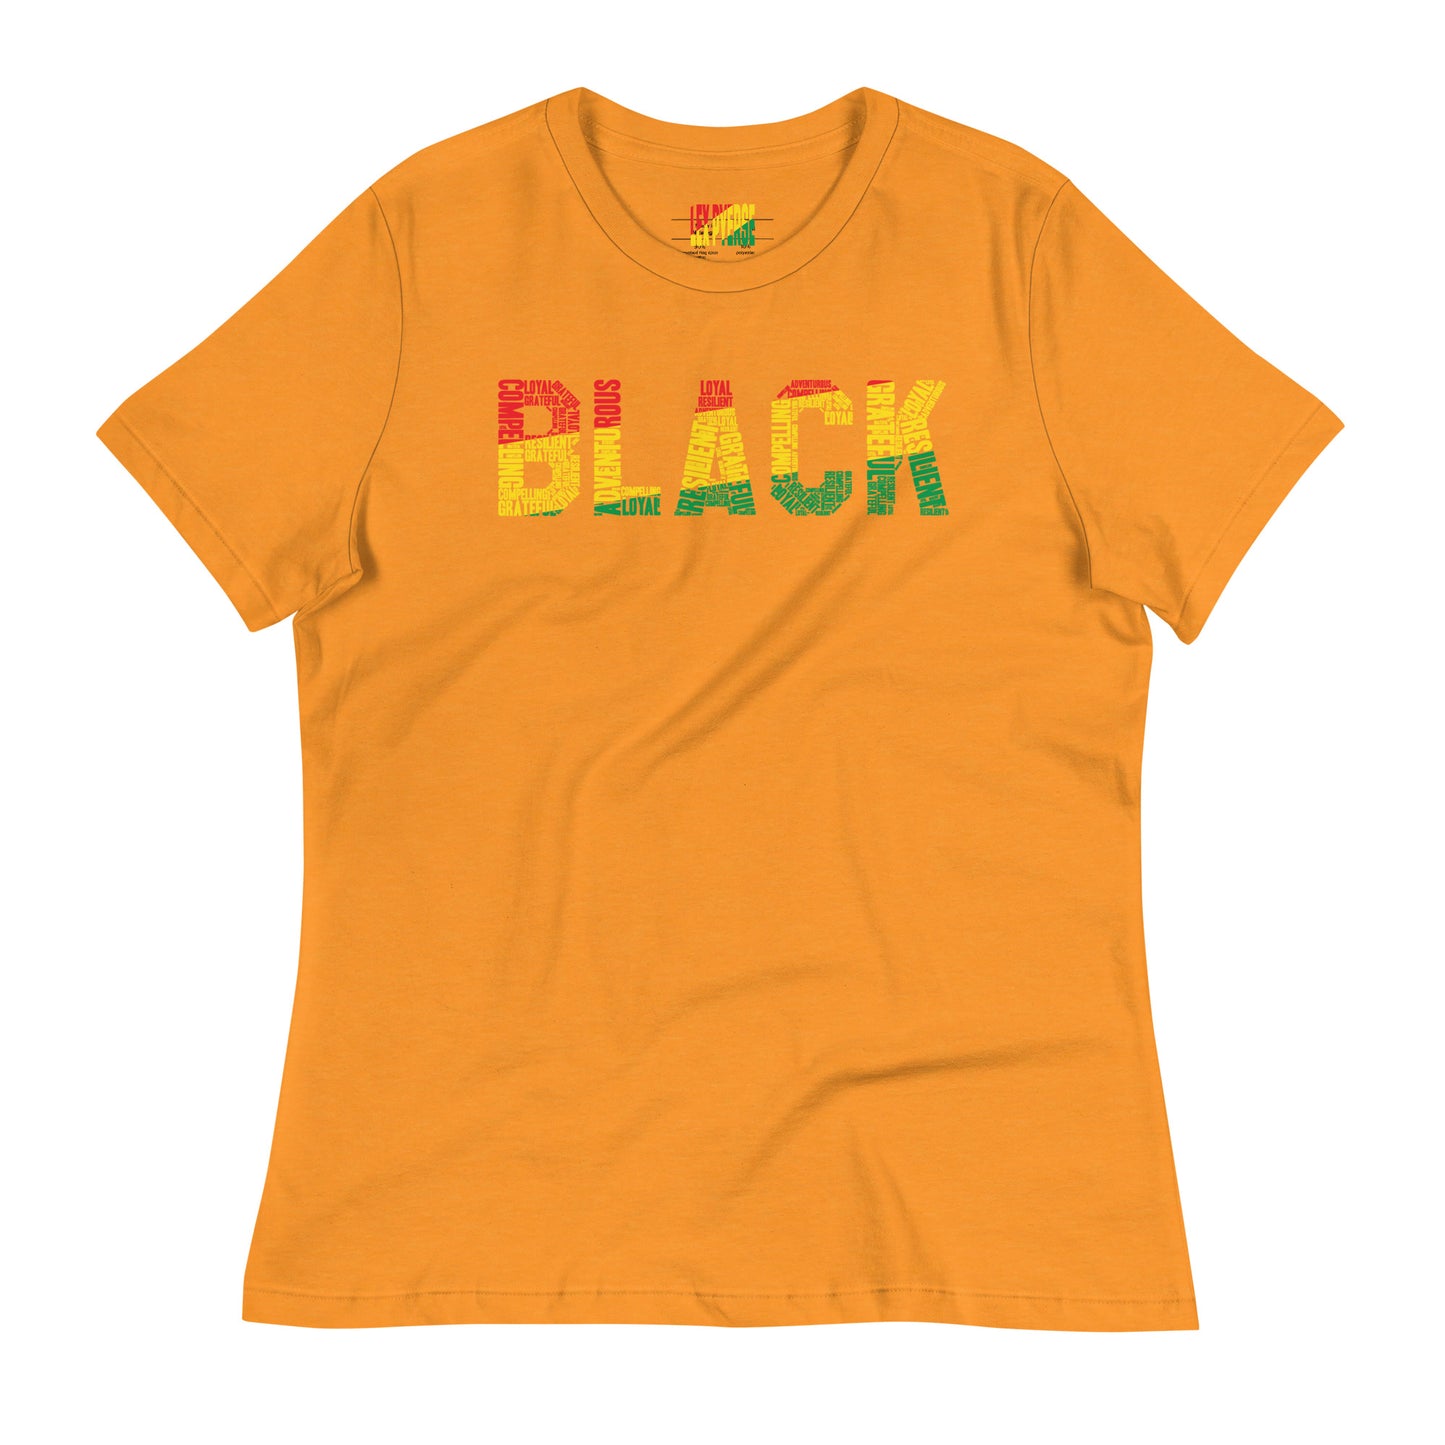 BLACK  Pan African Word Cluster Women's short sleeve t-shirt